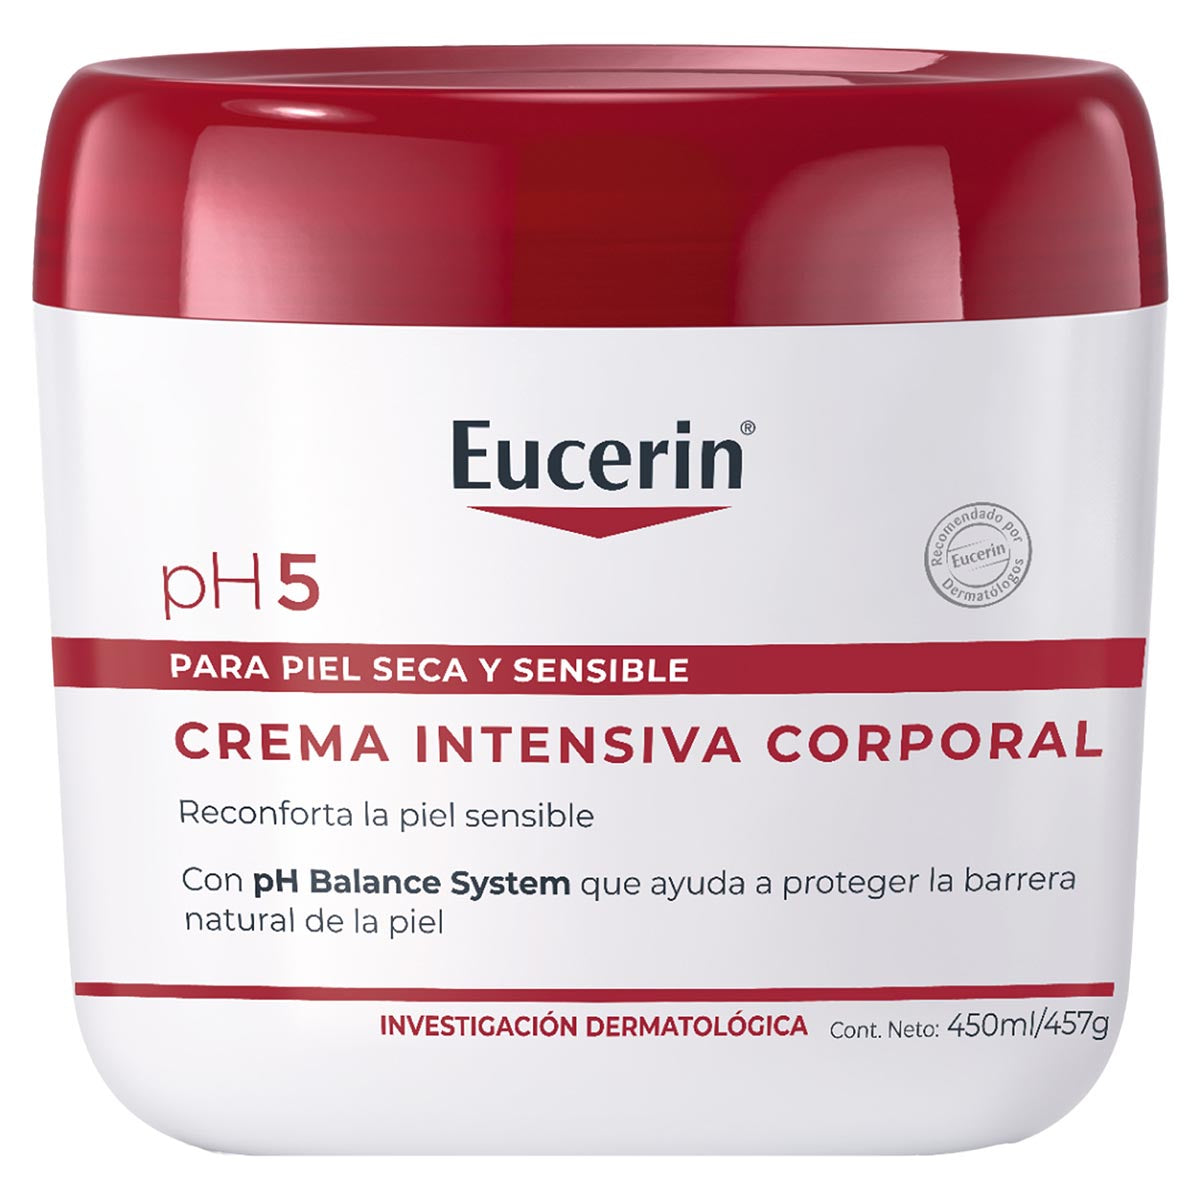 Eucerin pH5 crema intensiva corporal.